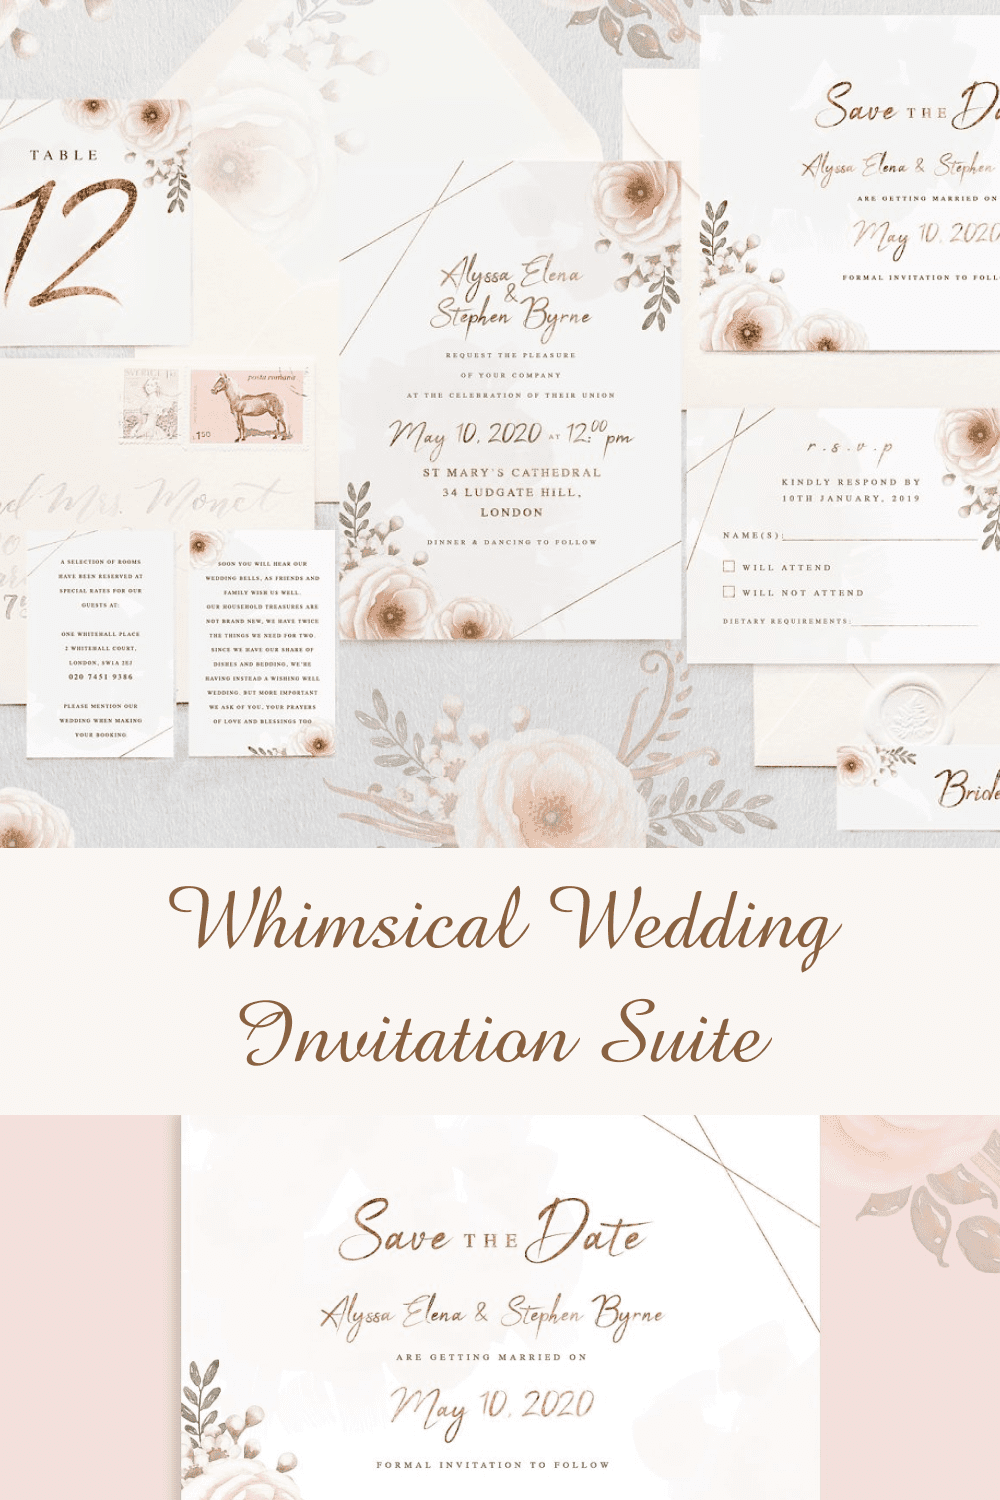 Whimsical Wedding Invitation Suite pinterest image.